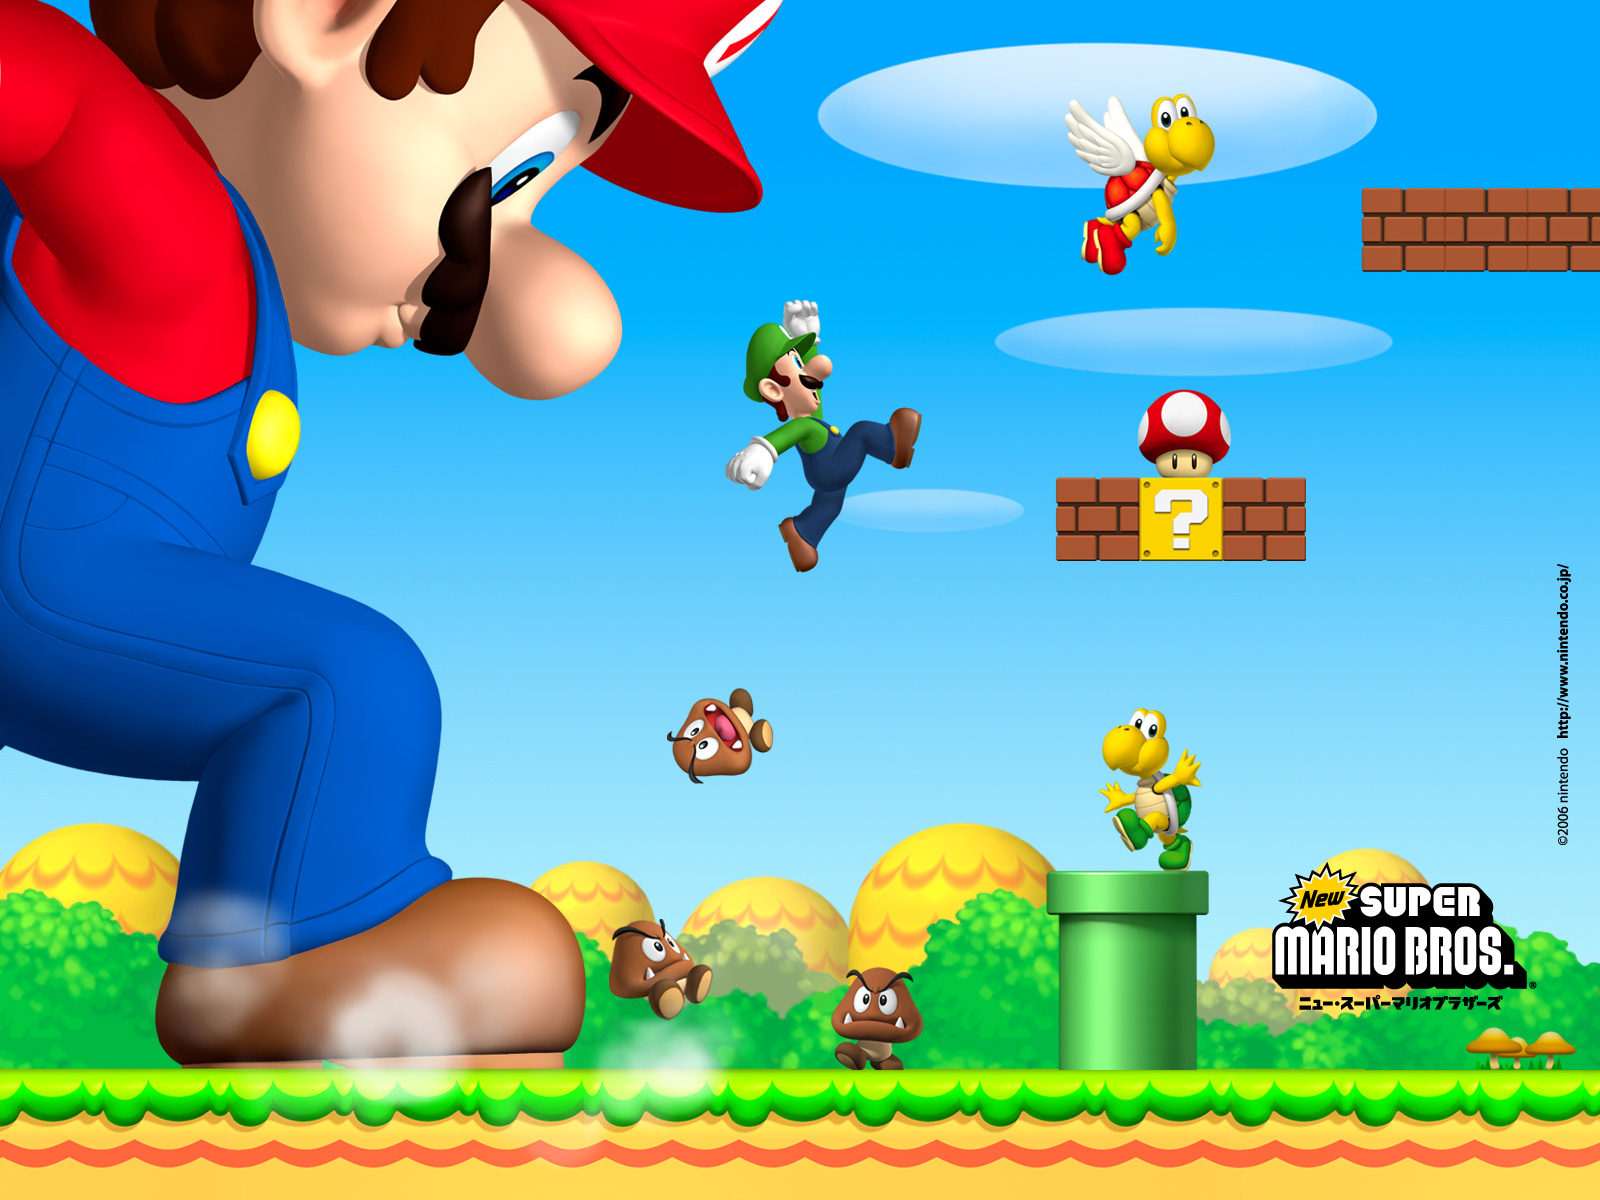 Tmk Downloads Images New Super Mario Bros Nds